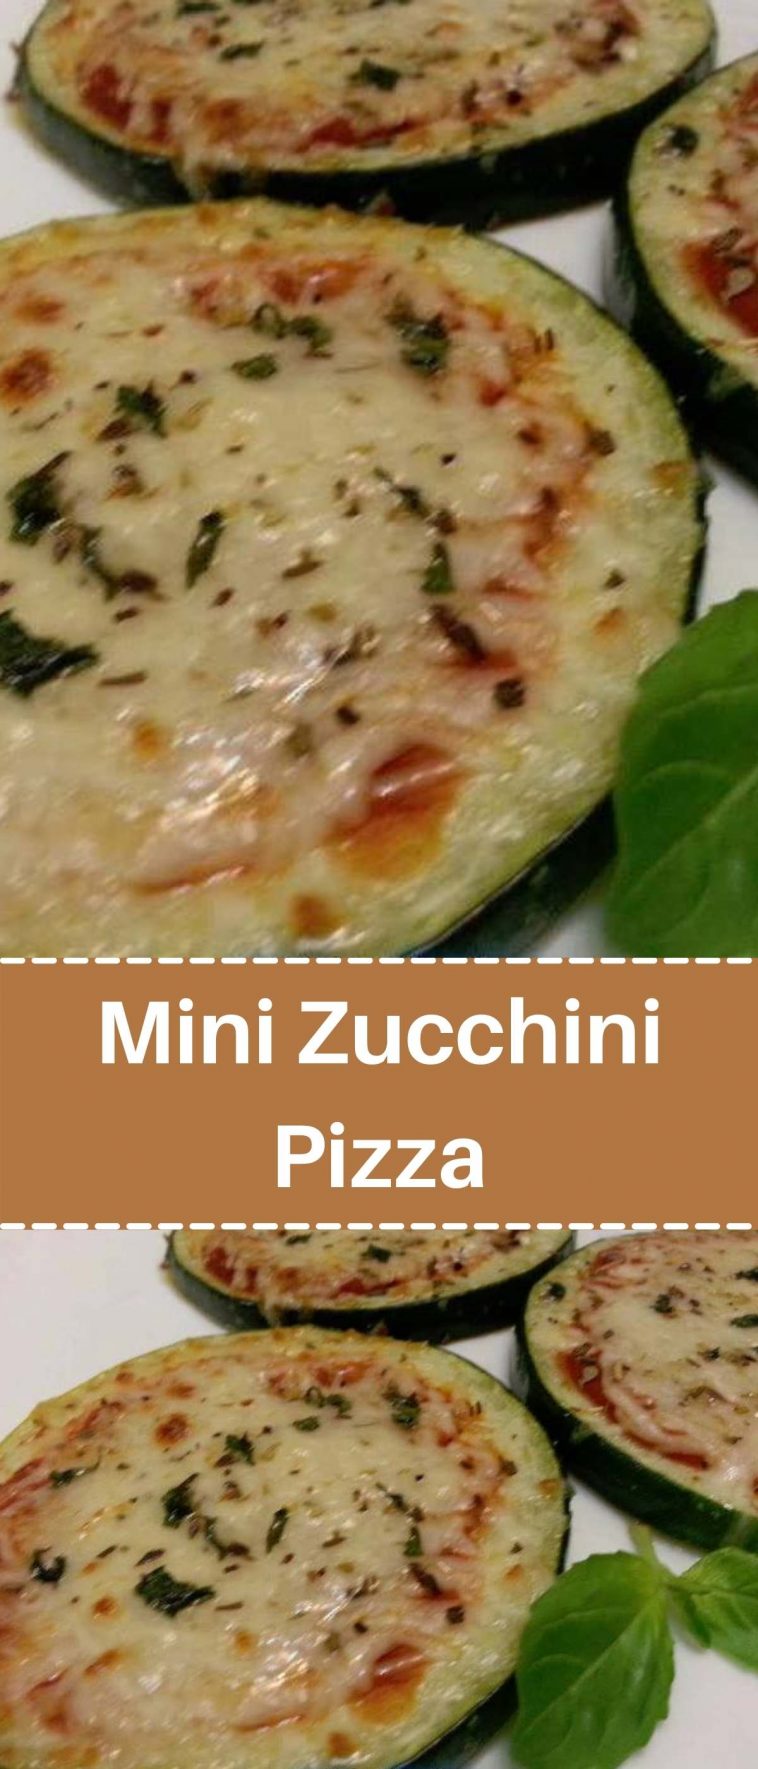 Mini Zucchini Pizza